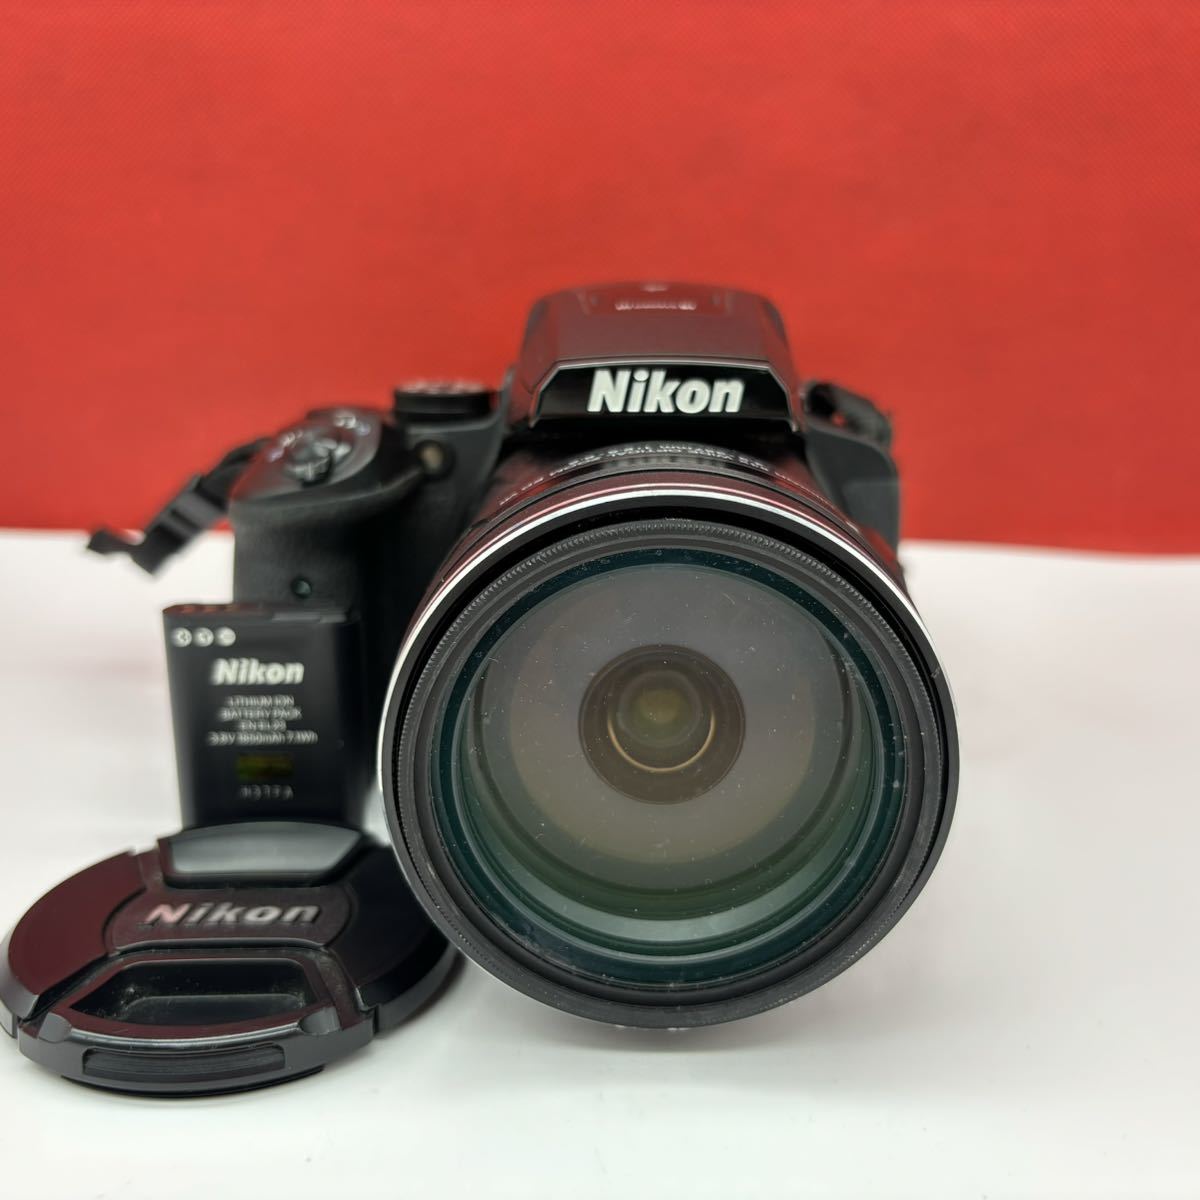 ◆ Nikon COOLPIX P900 コンパクトデジタルカメラ ZOOM ED VR 4.3-357mm F2.8-6.5 バッテリー付属 シャッターOK ニコン